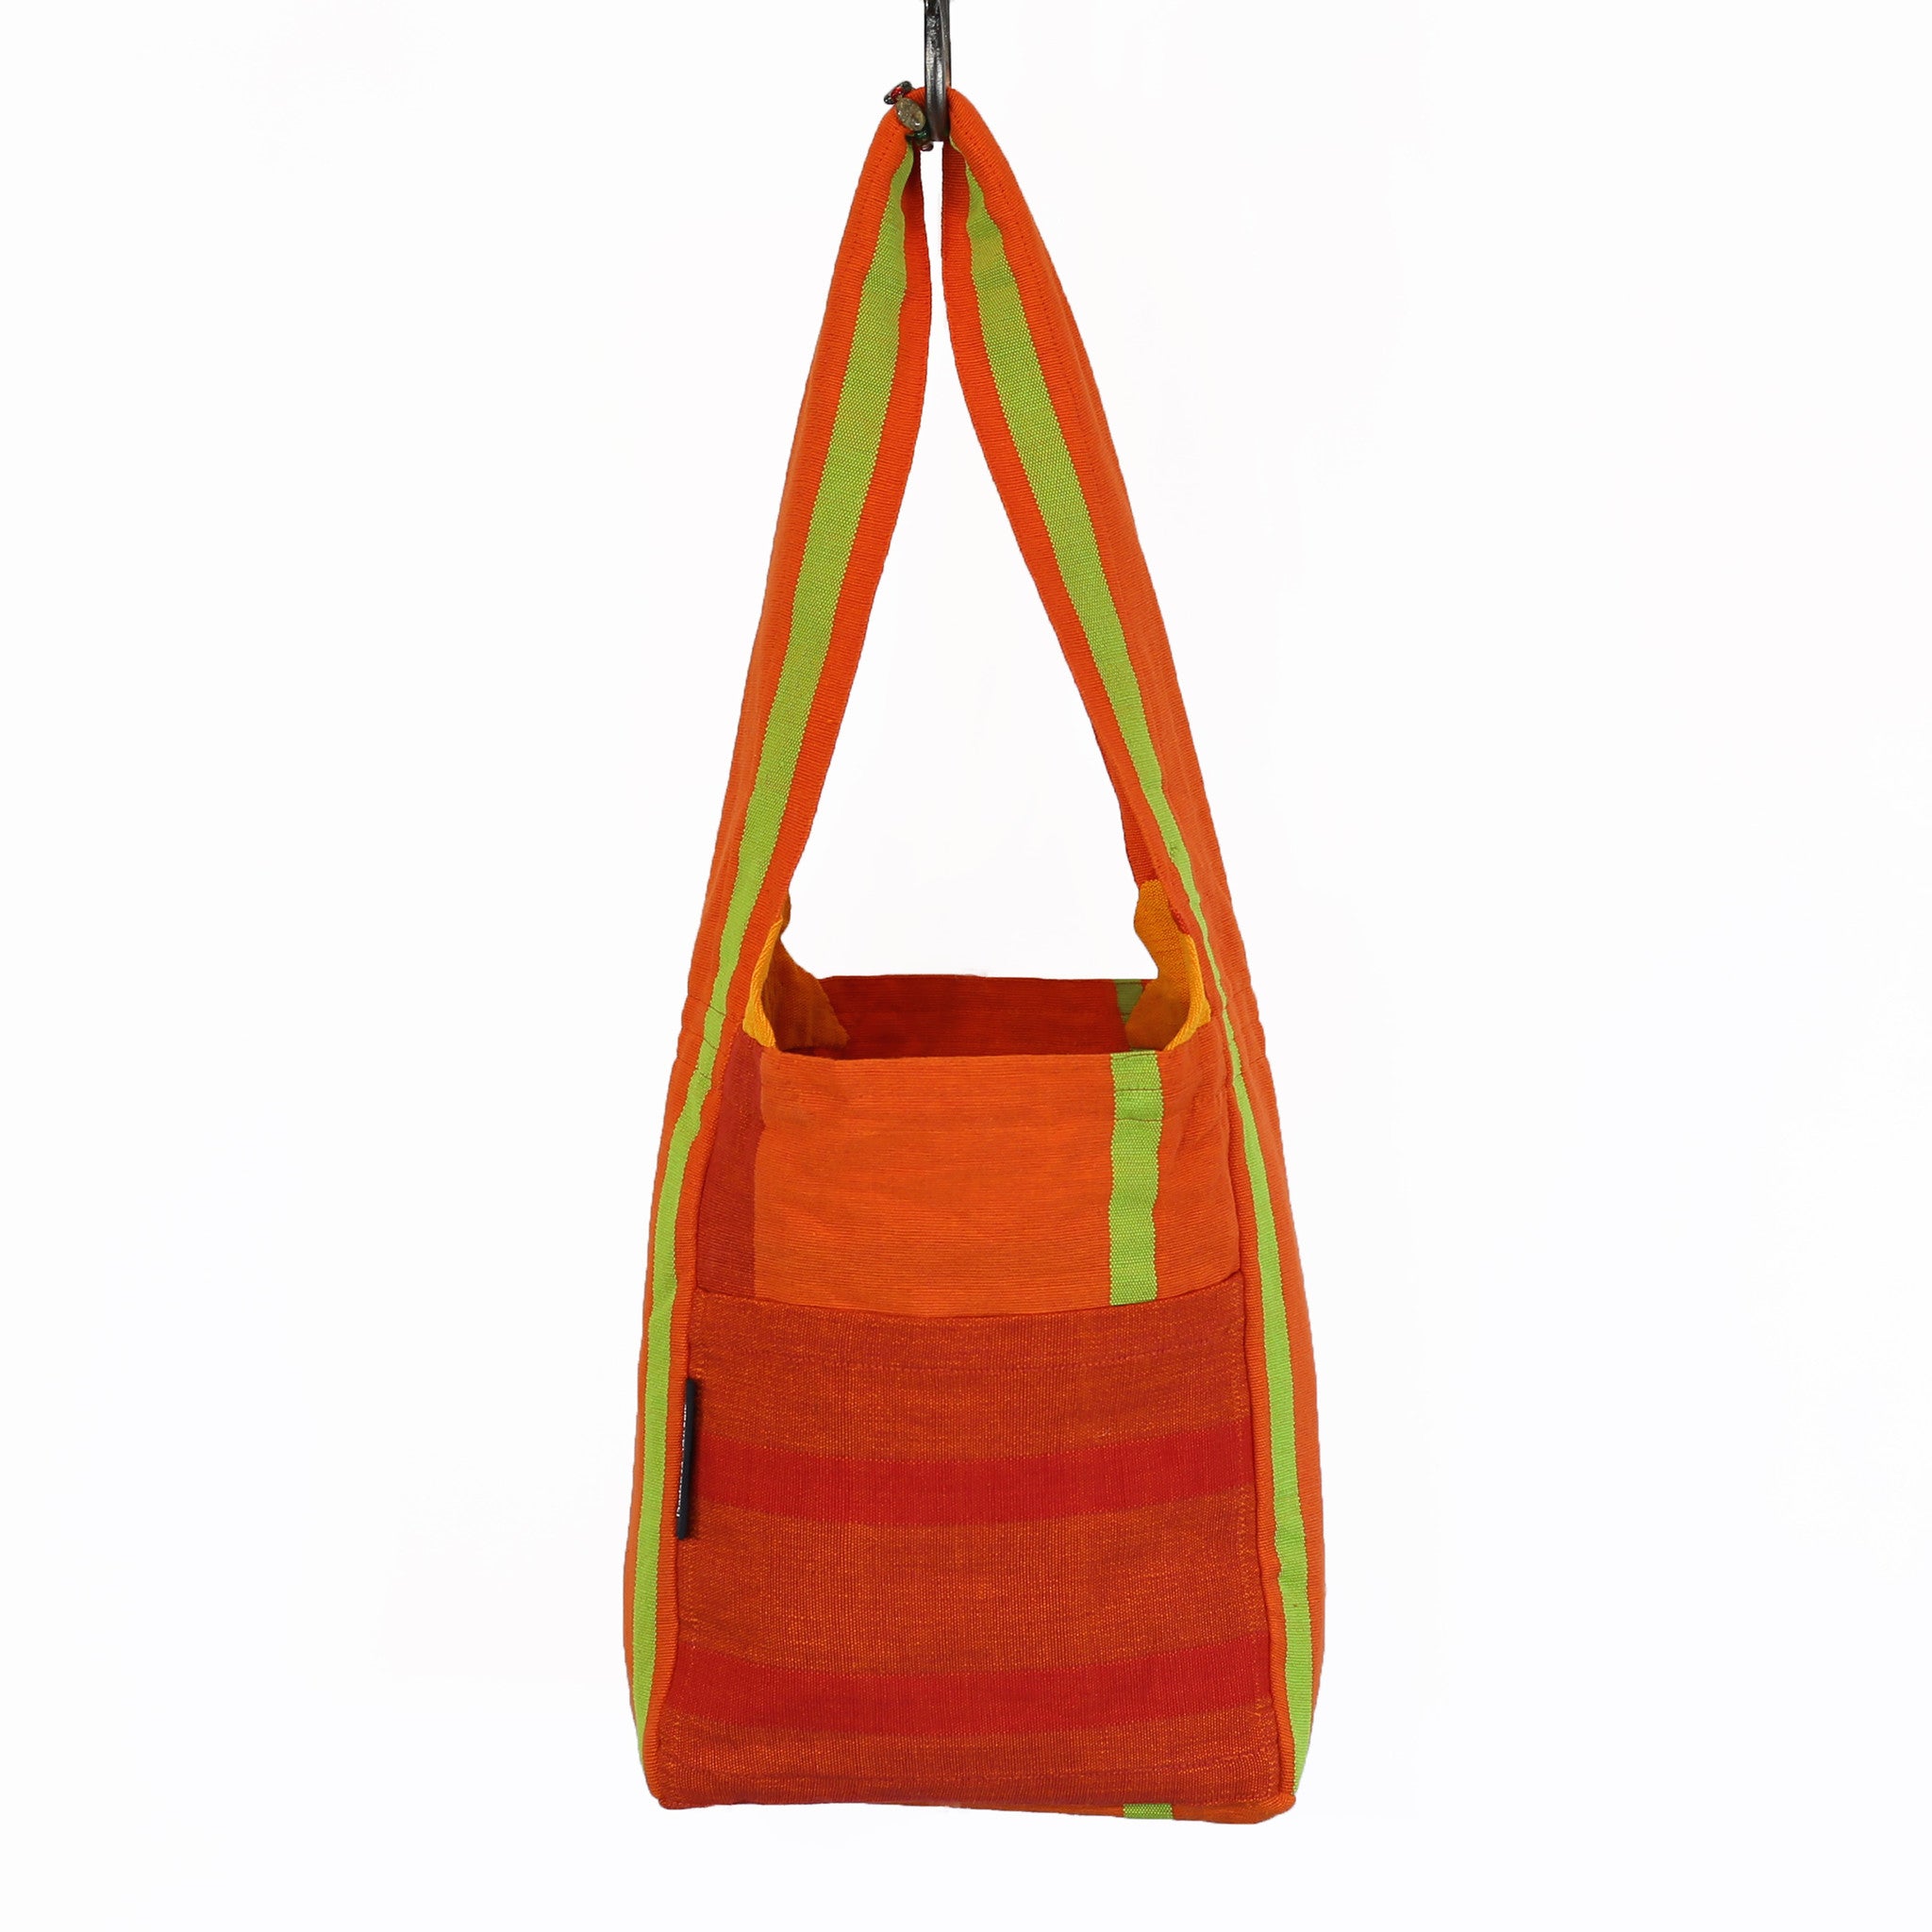 The Versatile Shoulder Bag – Poppy fabric shown (medium size)